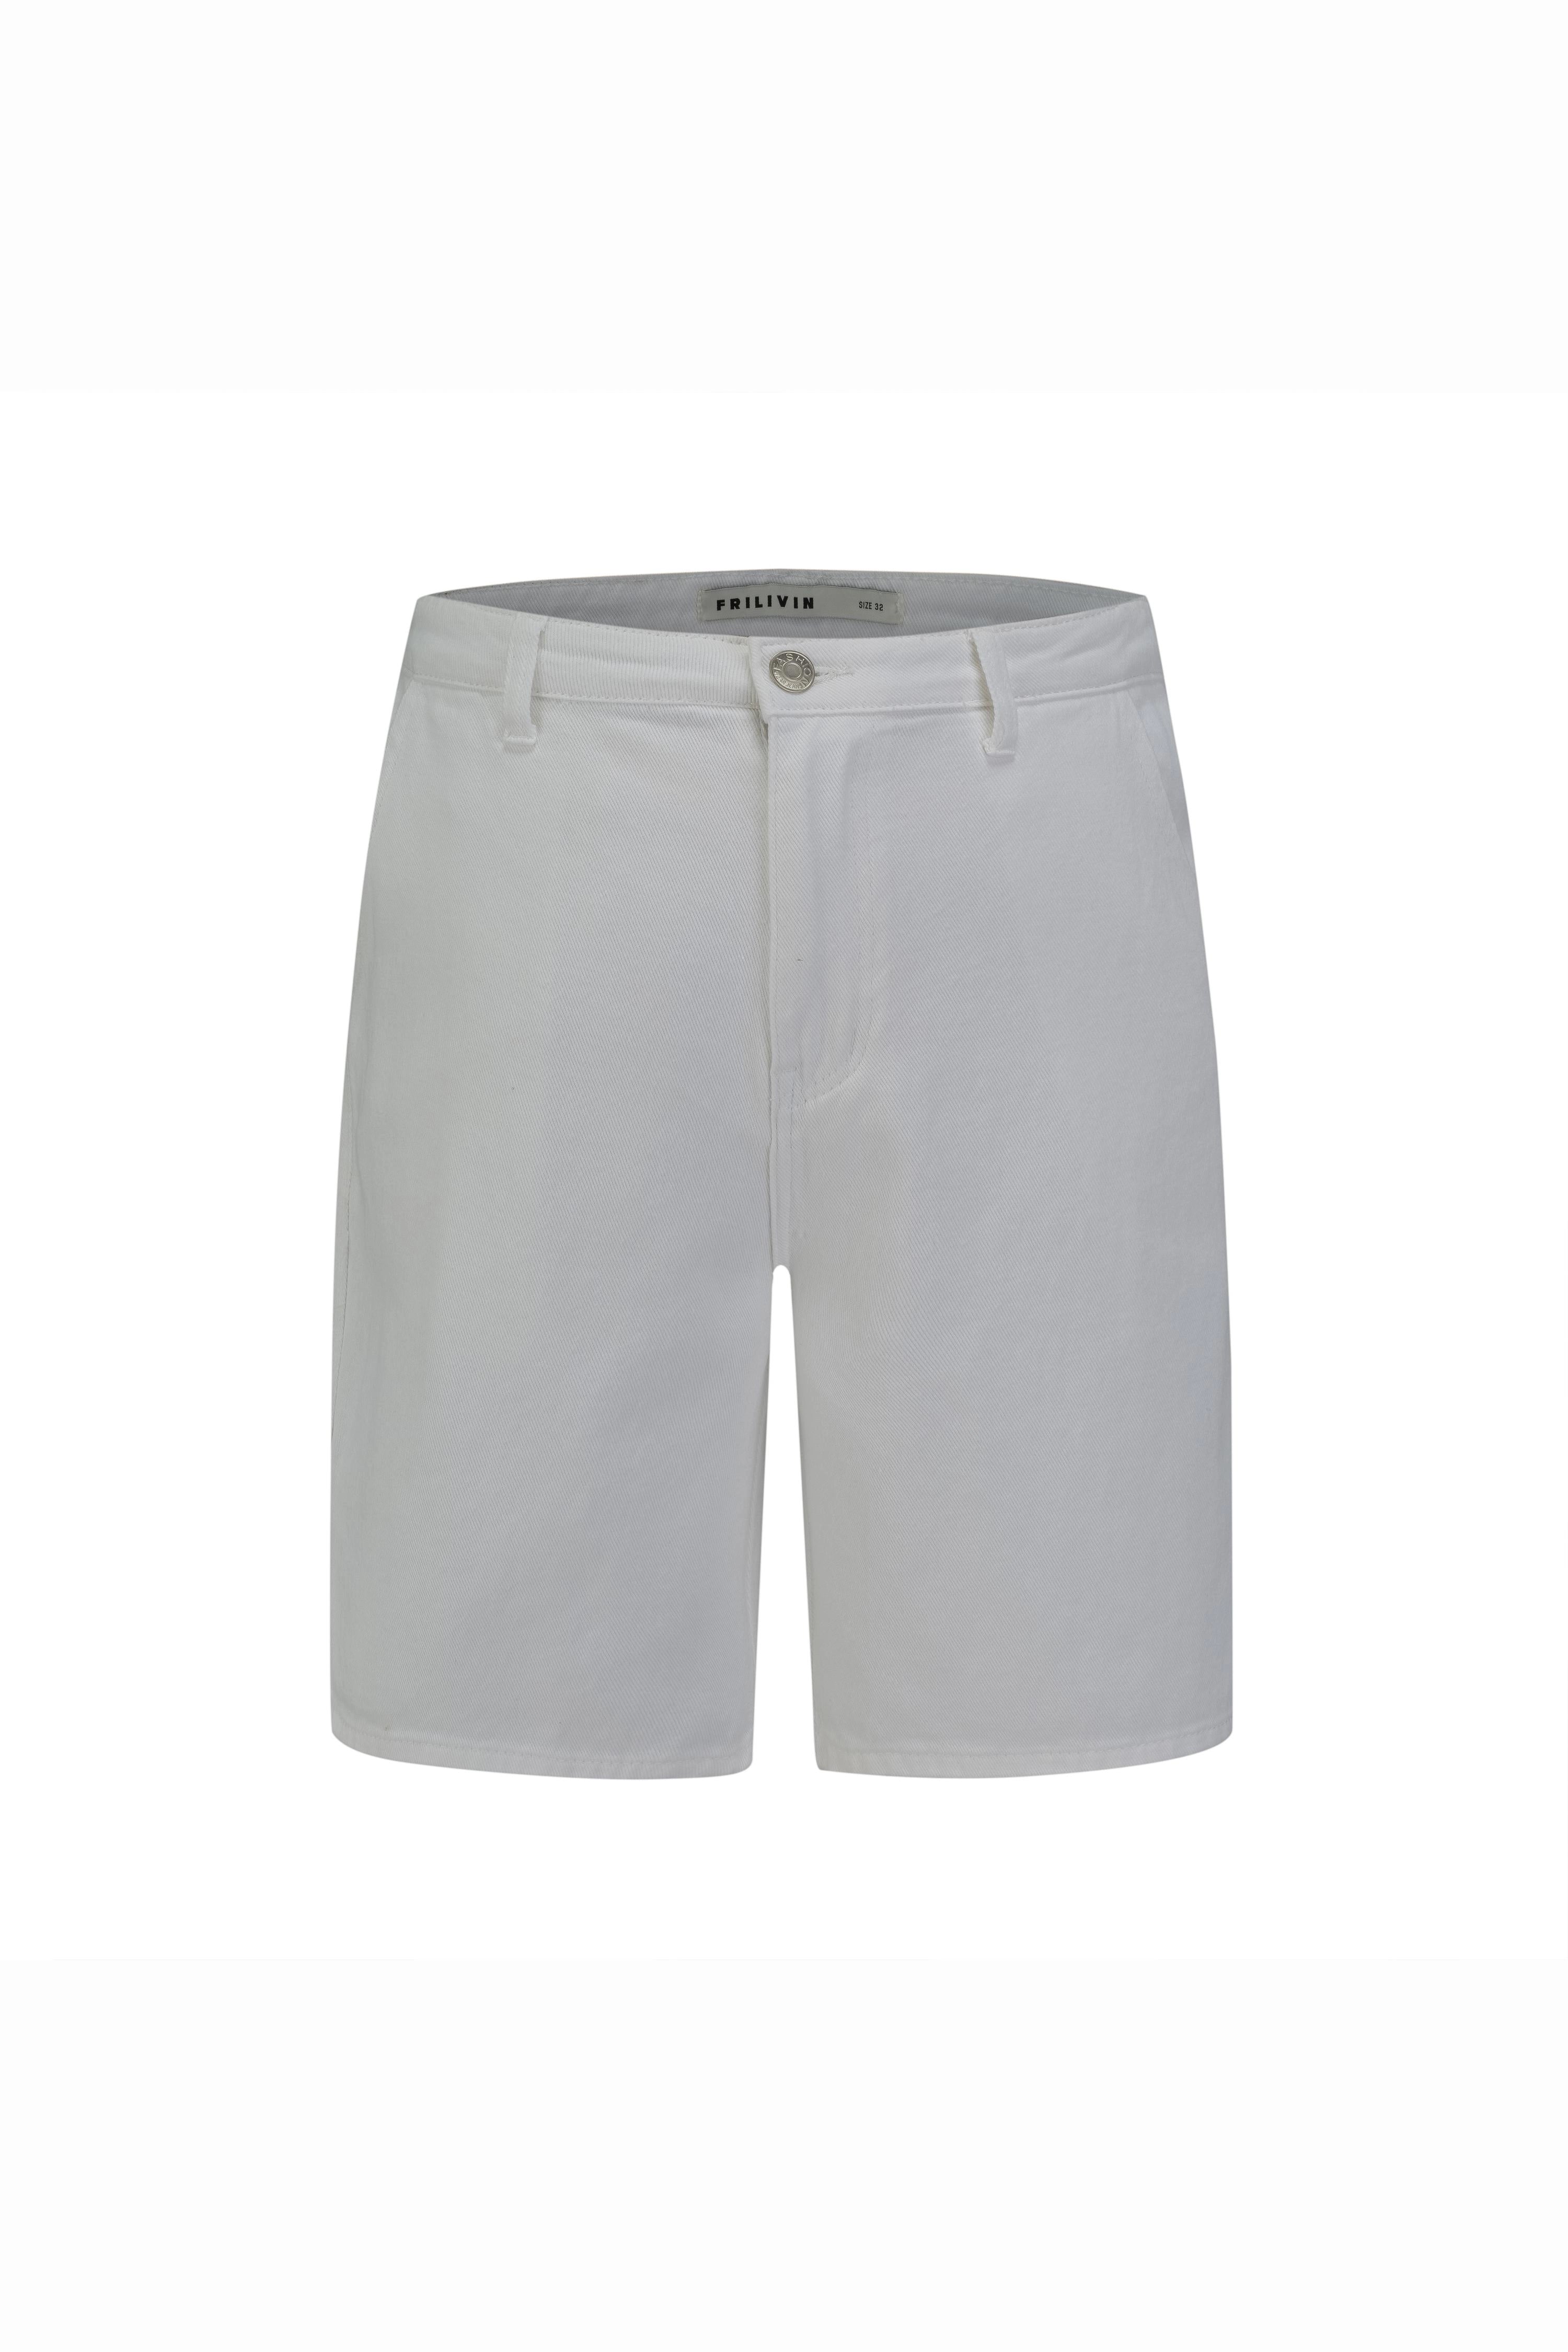 Classic plain wide cut shorts